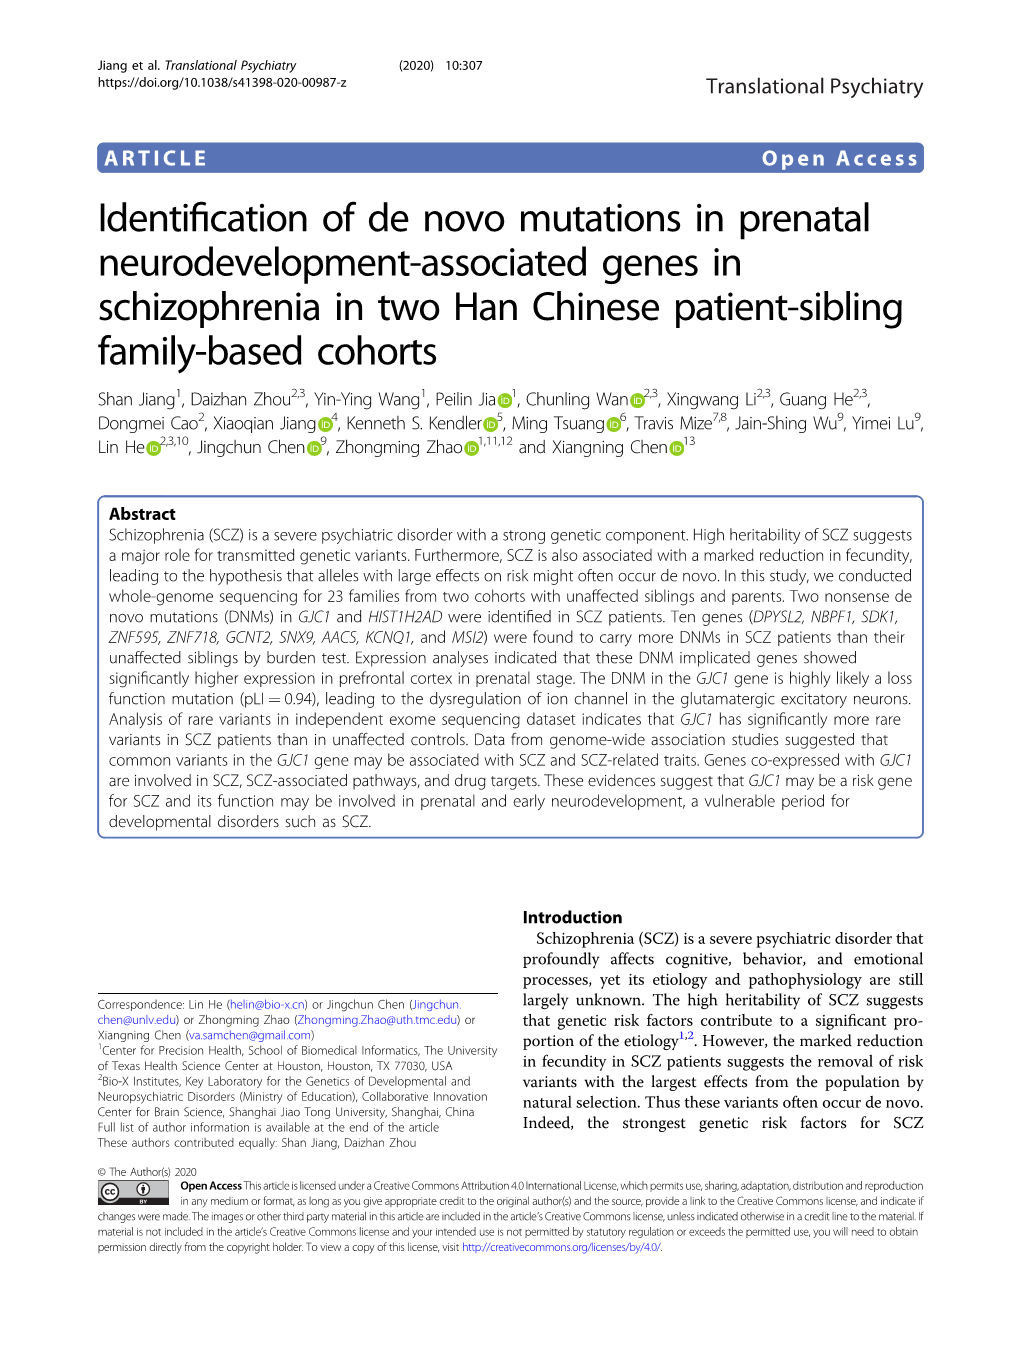 Identification of De Novo Mutations in Prenatal